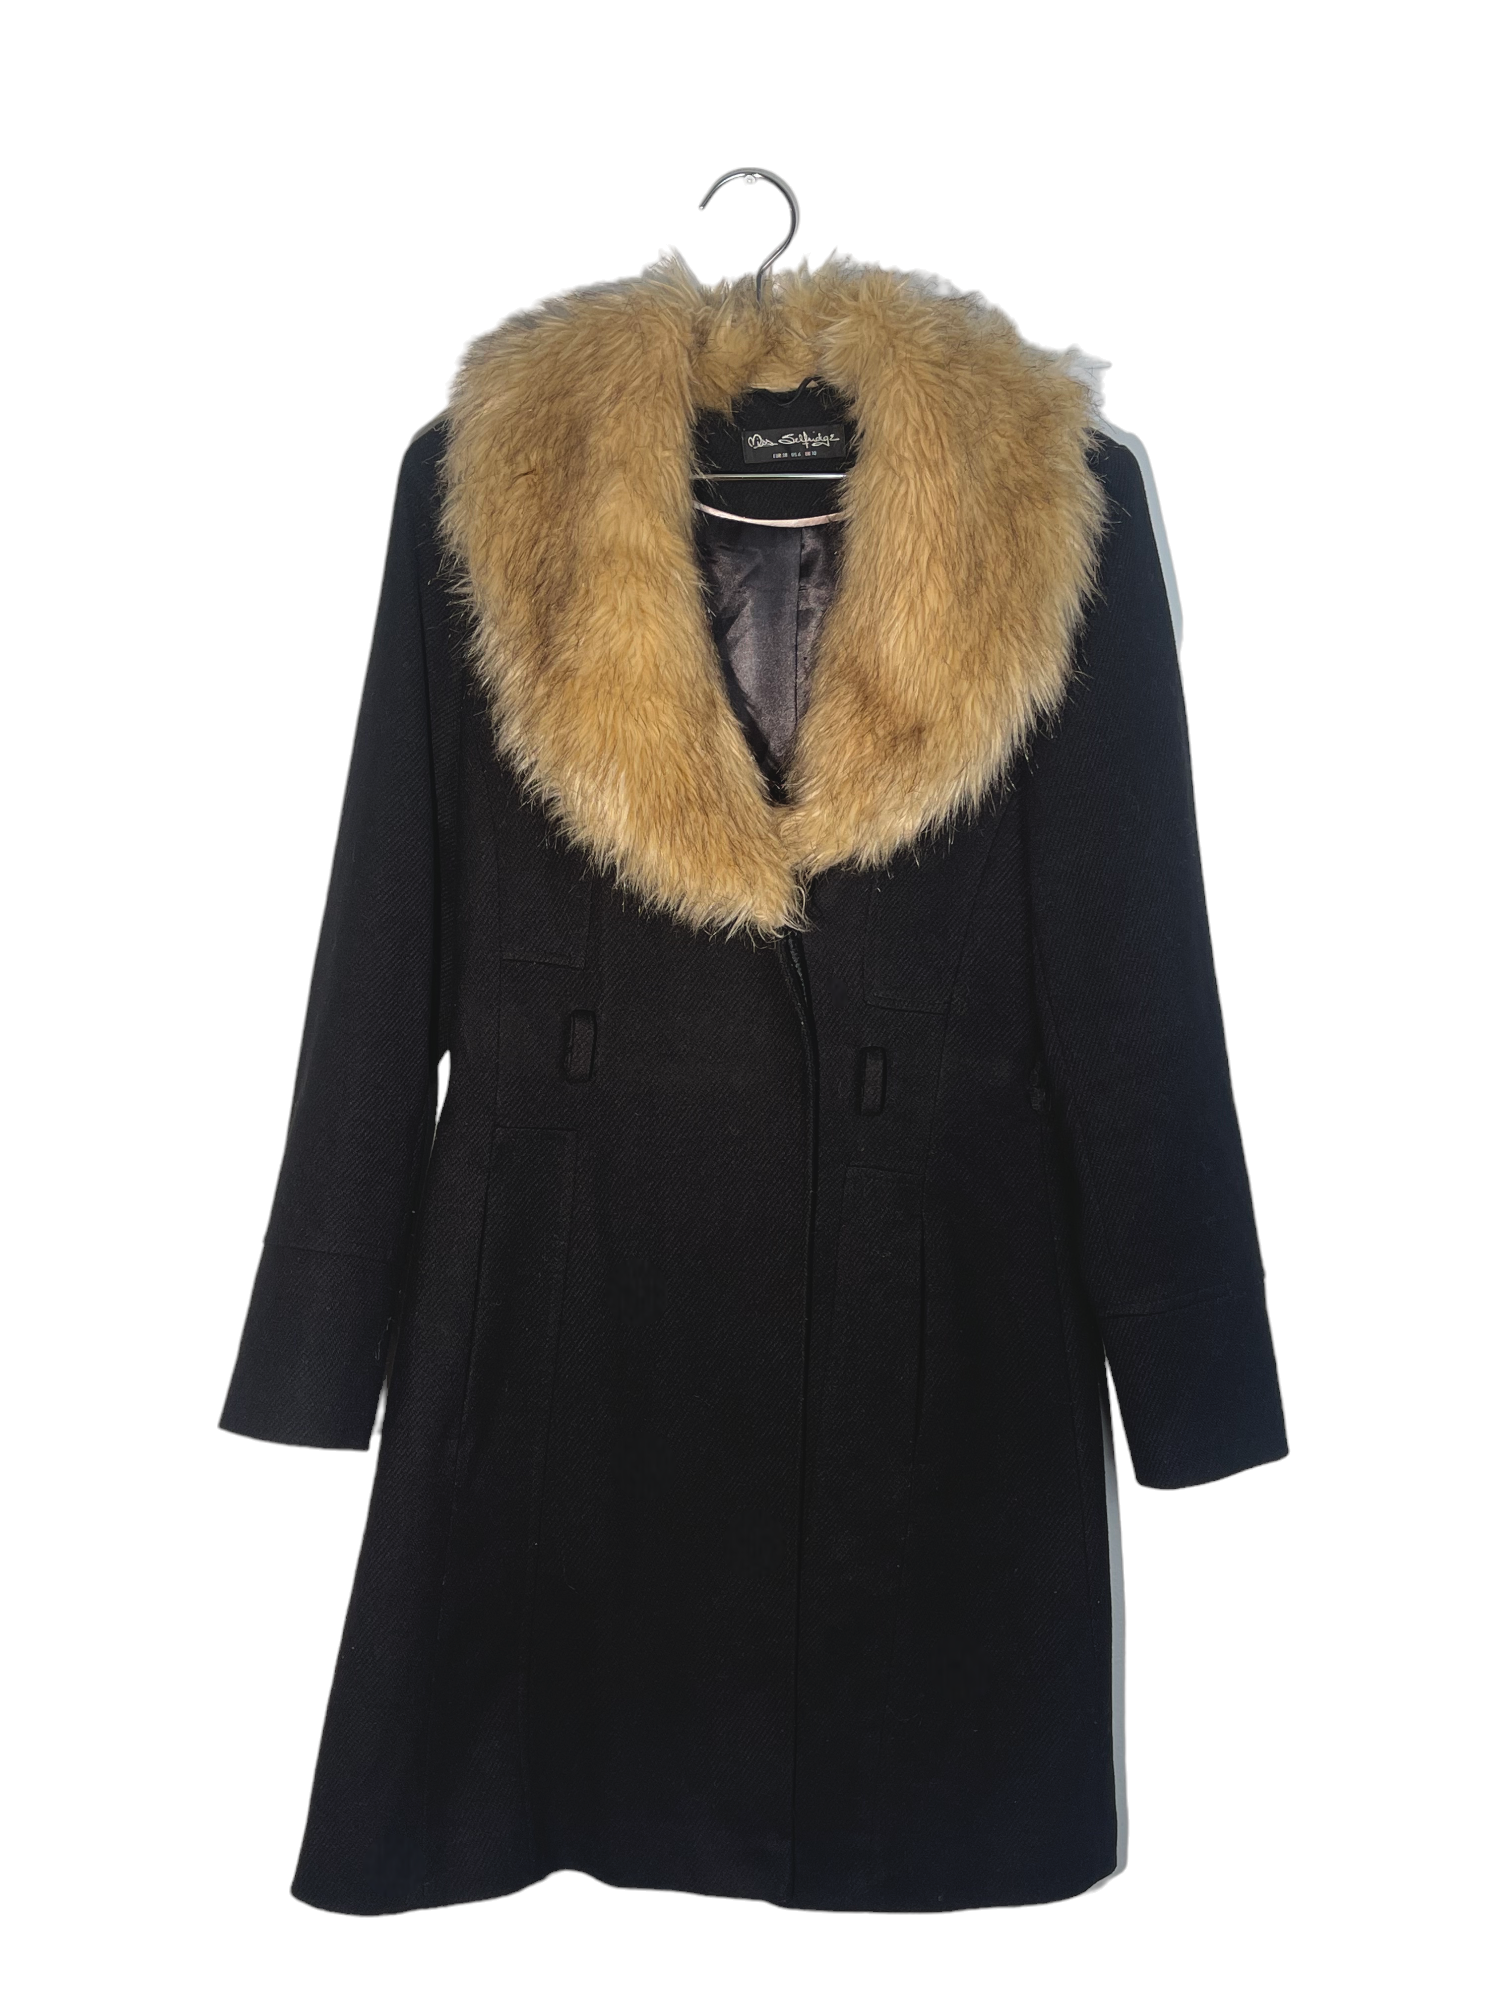 Black Coat With Beige Fuzzy Collar